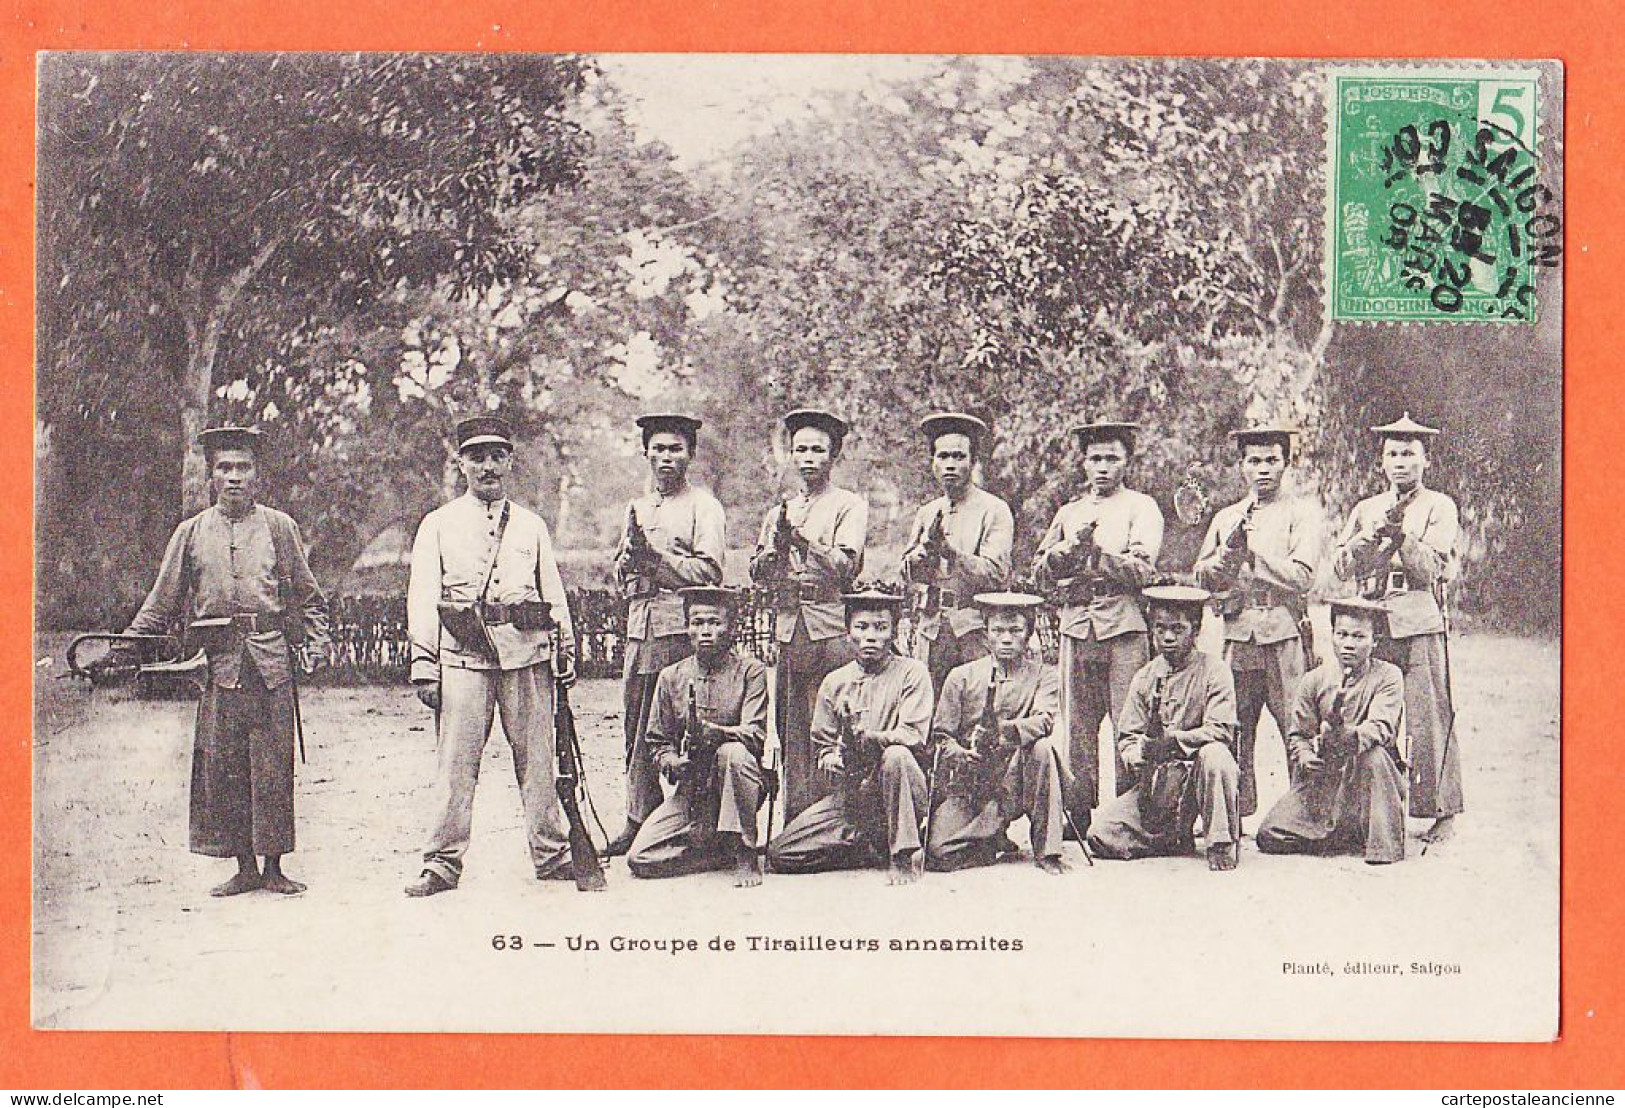 31111 / VietNam Groupe Tirailleurs Annamites Viet-Nam 1908 à ESTRUC DEVILLA Peyrac Minervois Edi. PLANTE Saigon 63 - Viêt-Nam